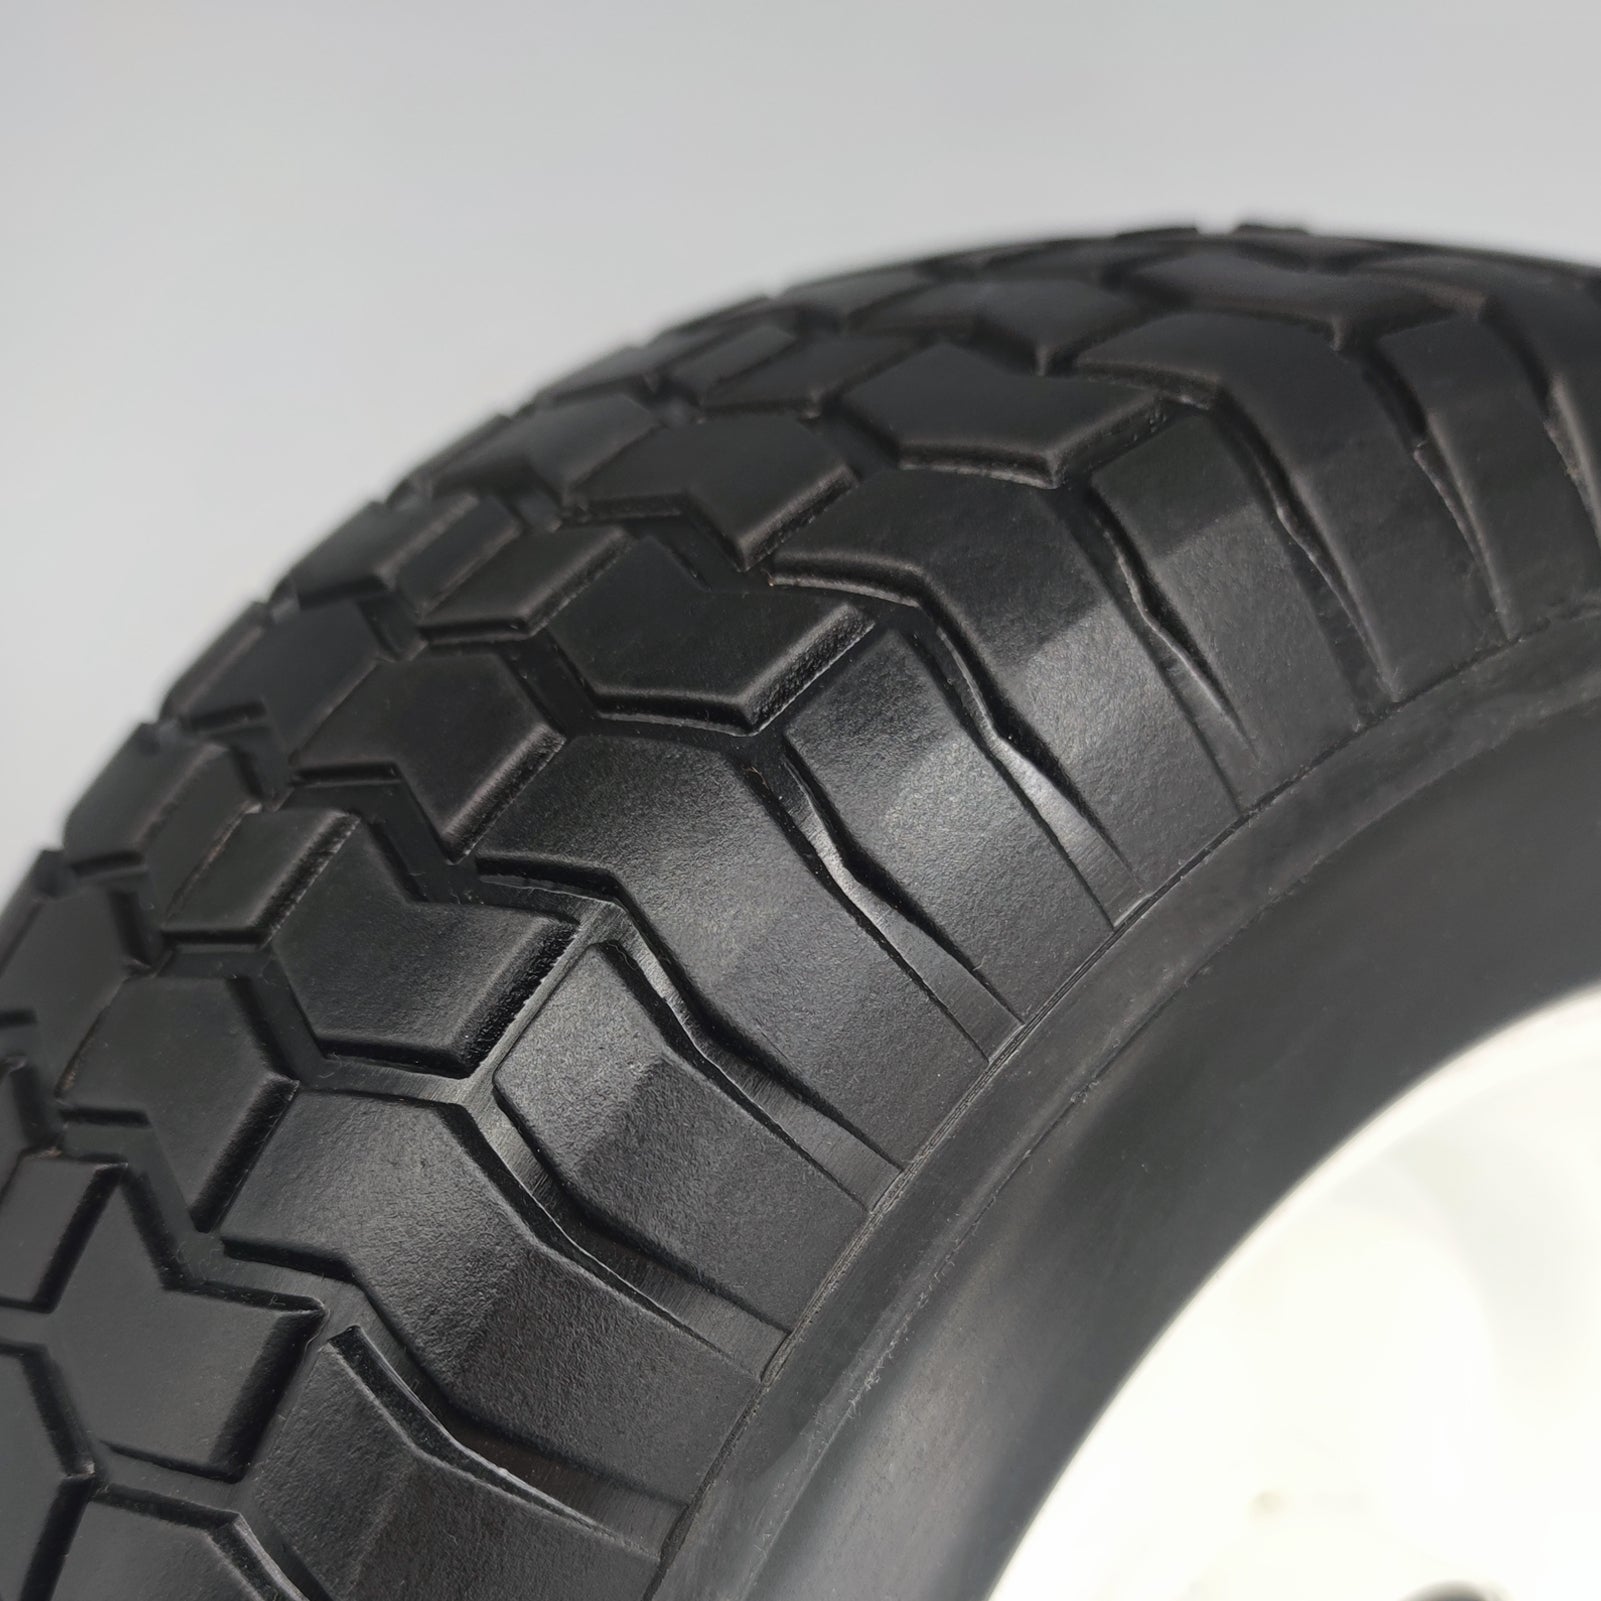 Flat Free 16x6.50-8 Lawn Mower Tire, 1" Bearings, 3" Hub - RelaxHome